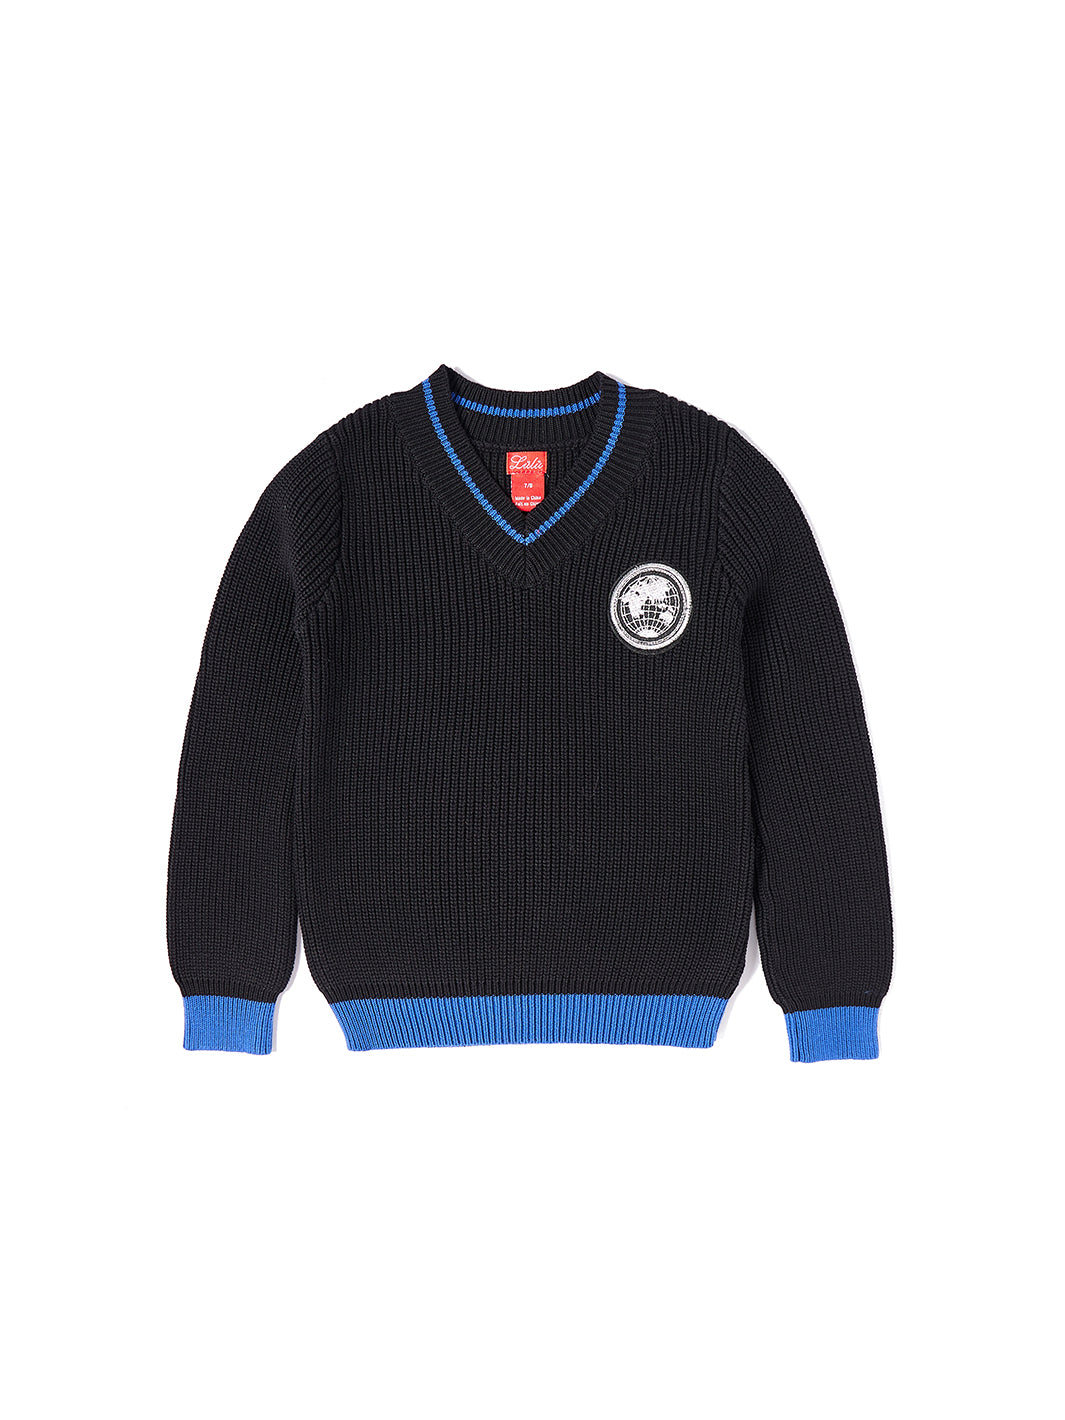 Emblem Sweater - Royal Blue